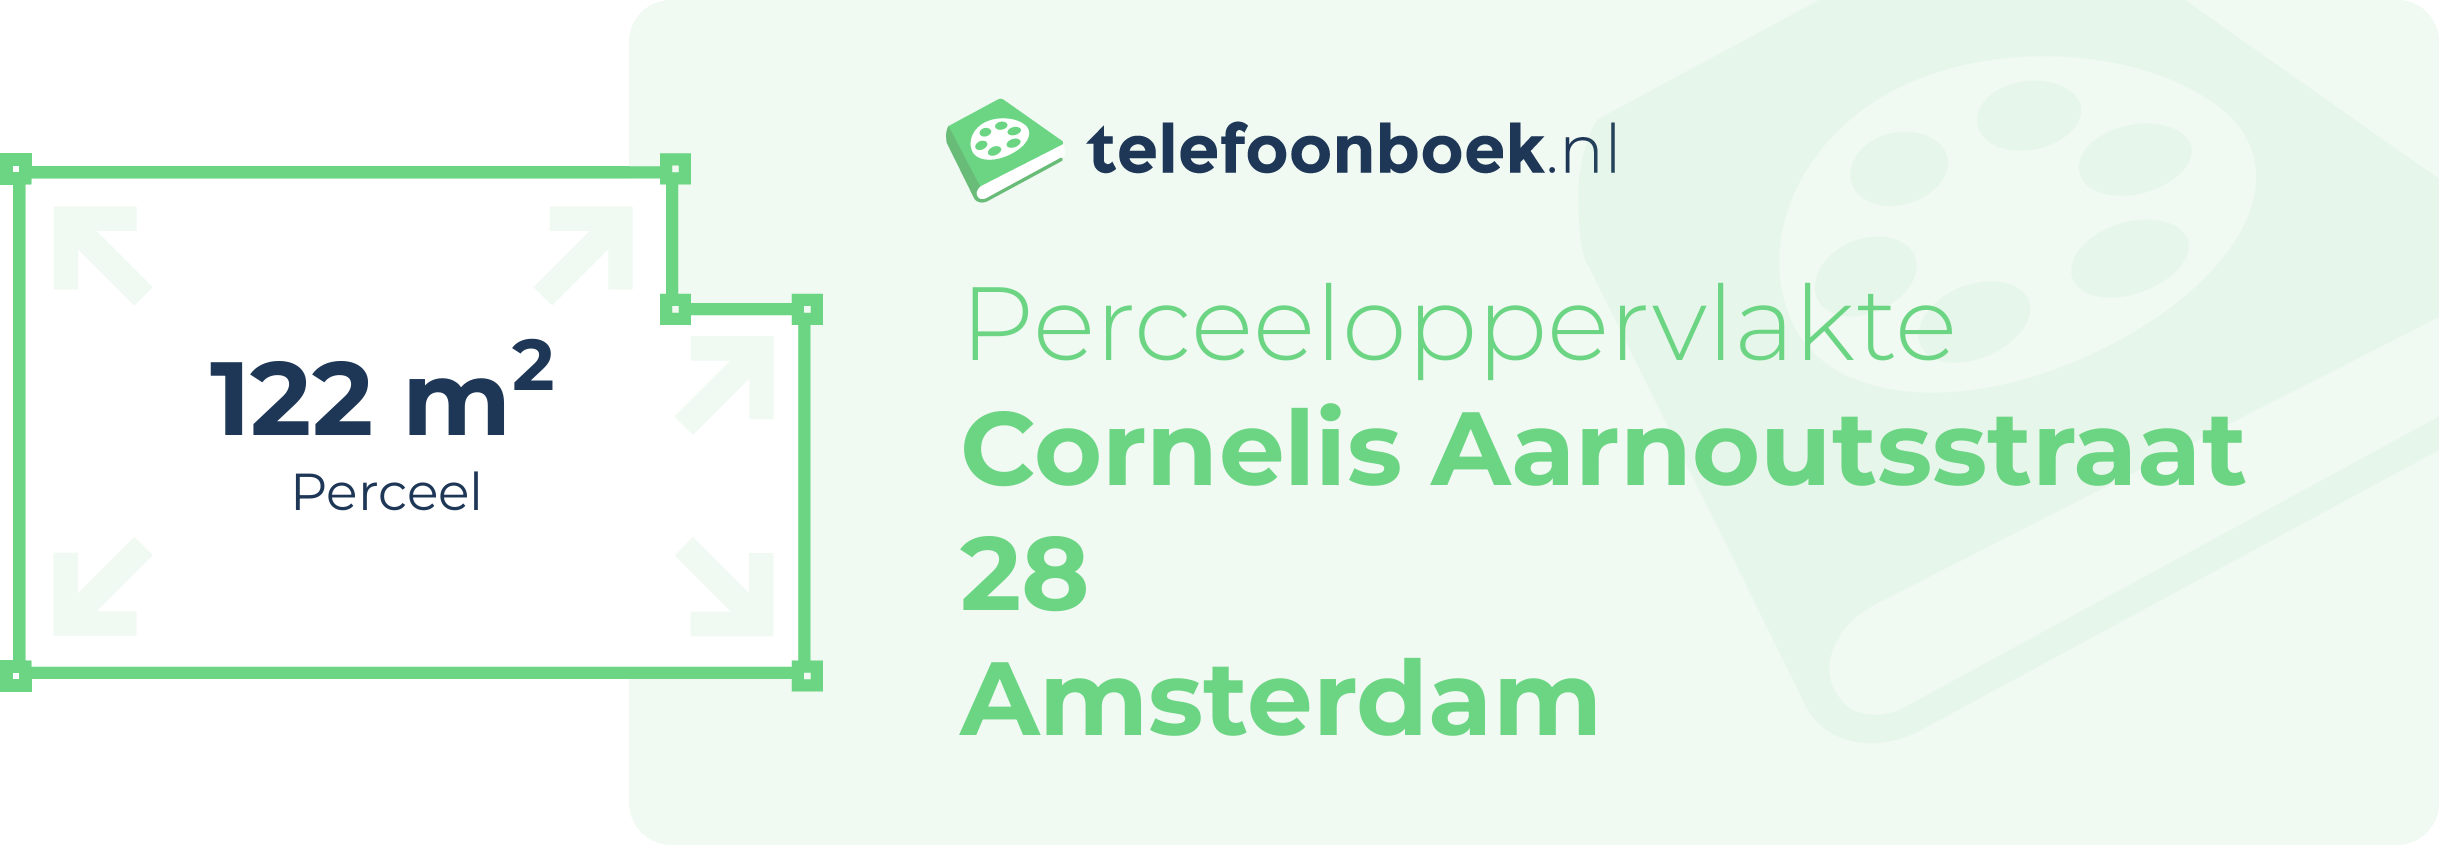 Perceeloppervlakte Cornelis Aarnoutsstraat 28 Amsterdam